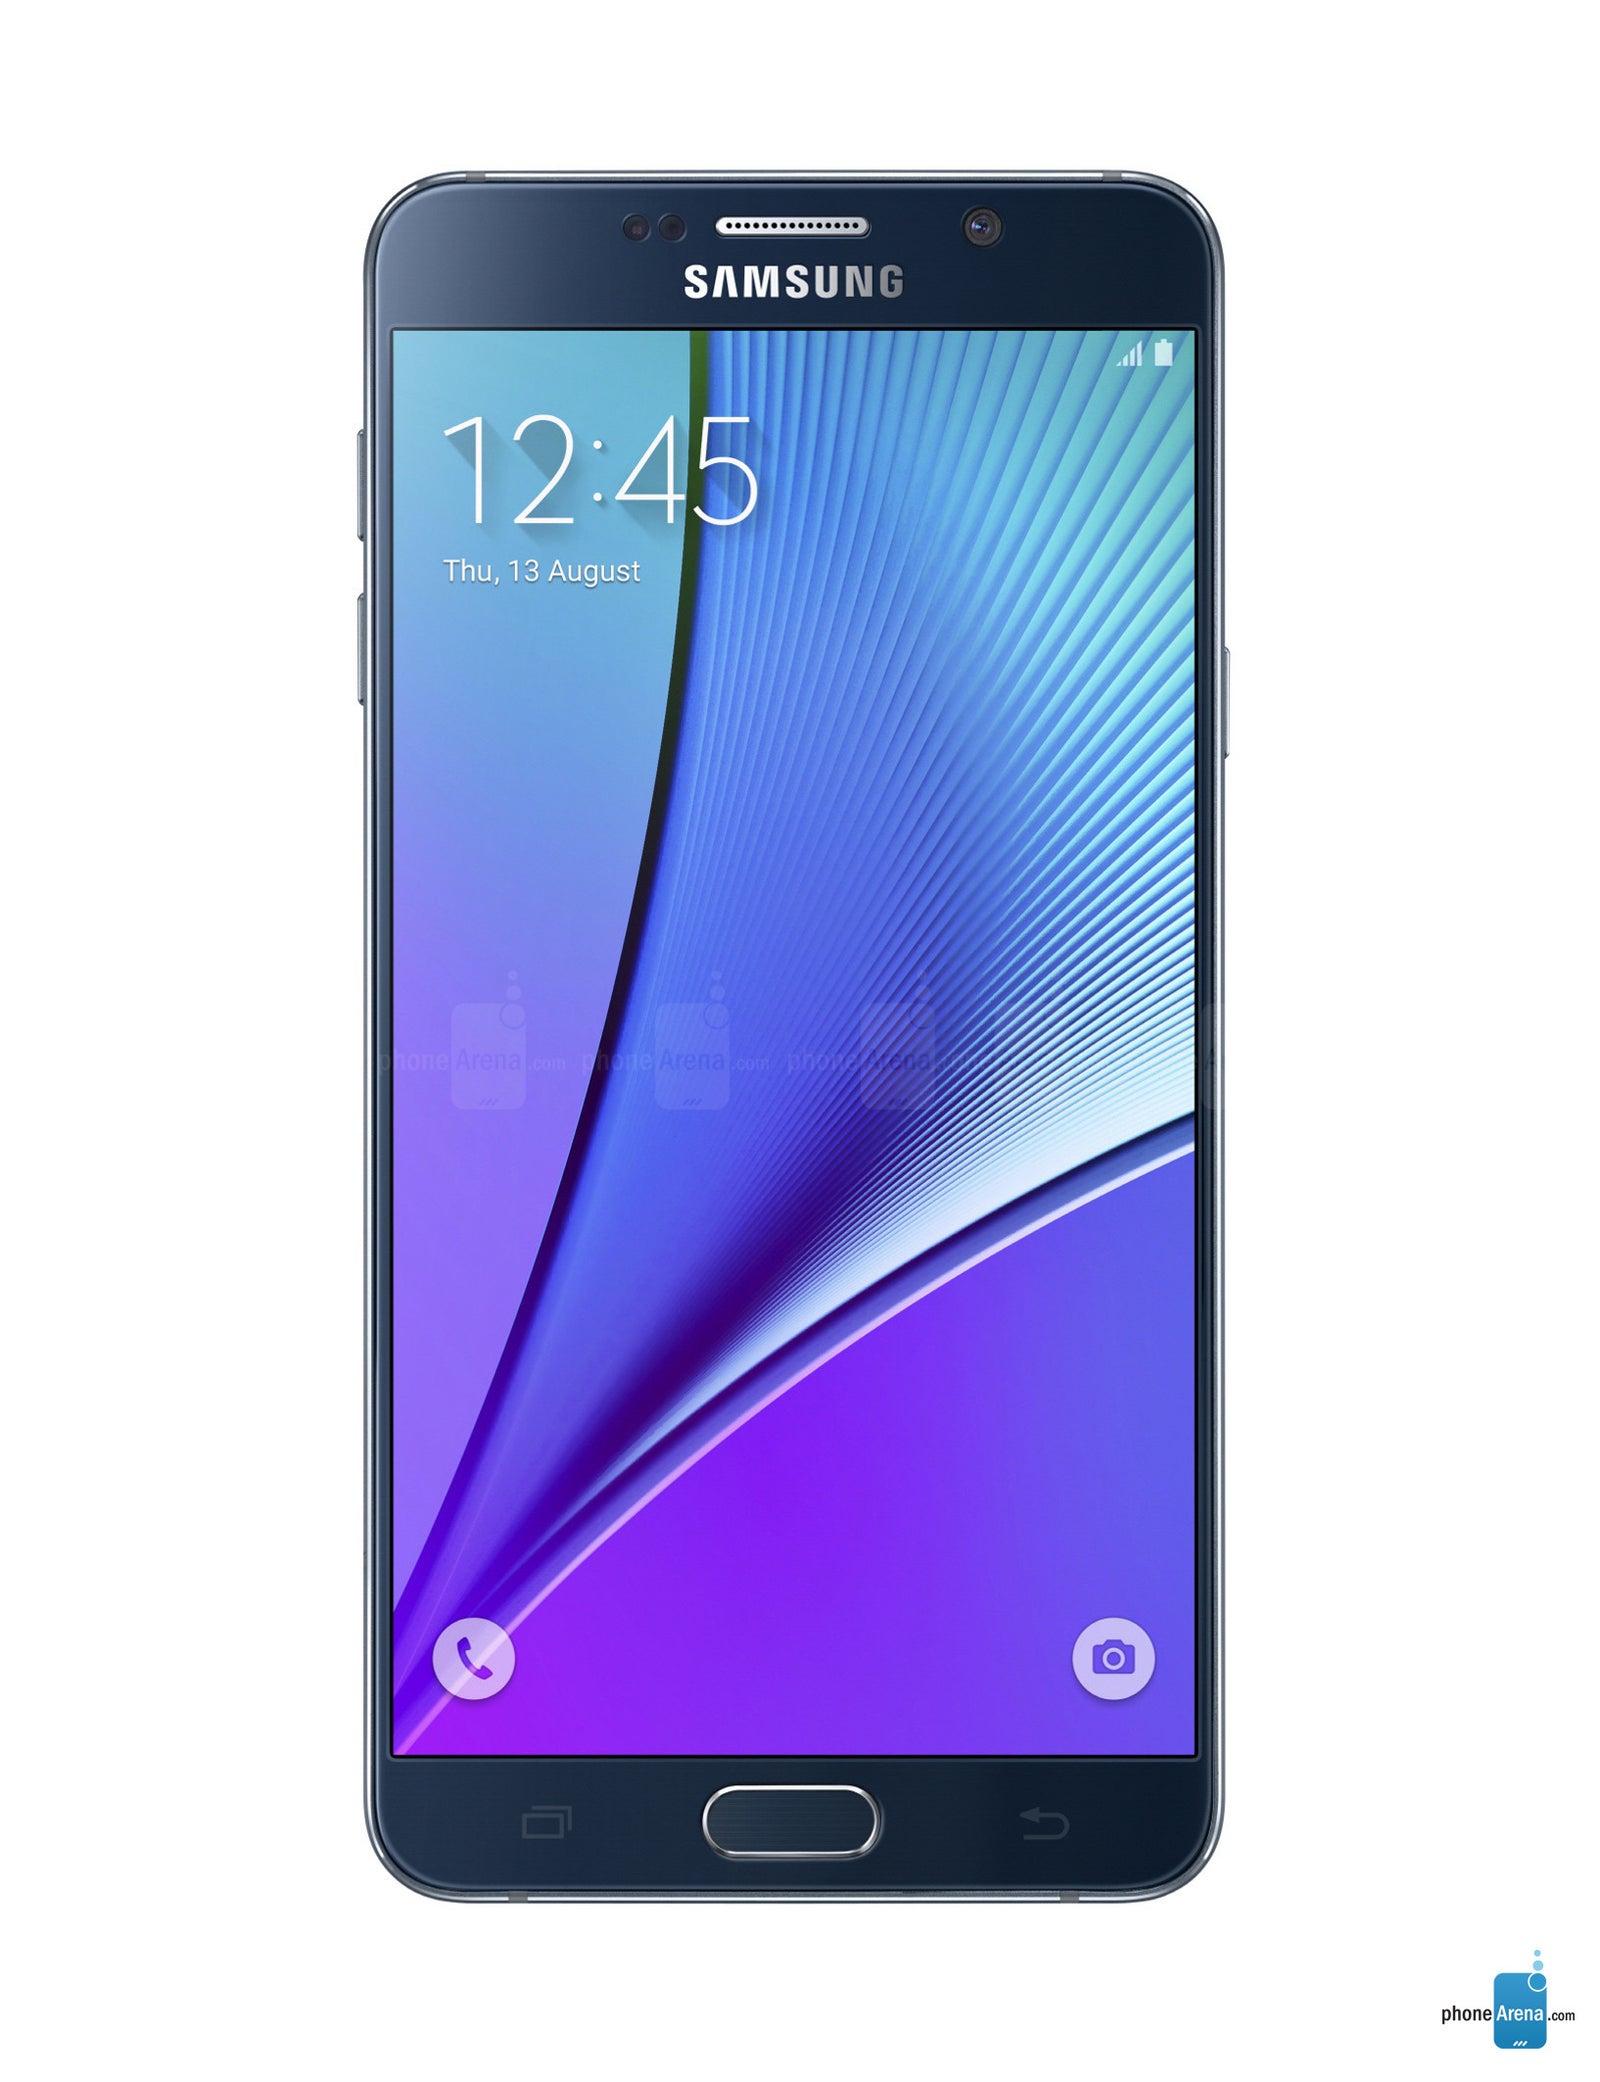 Samsung Galaxy Note5 specs - PhoneArena